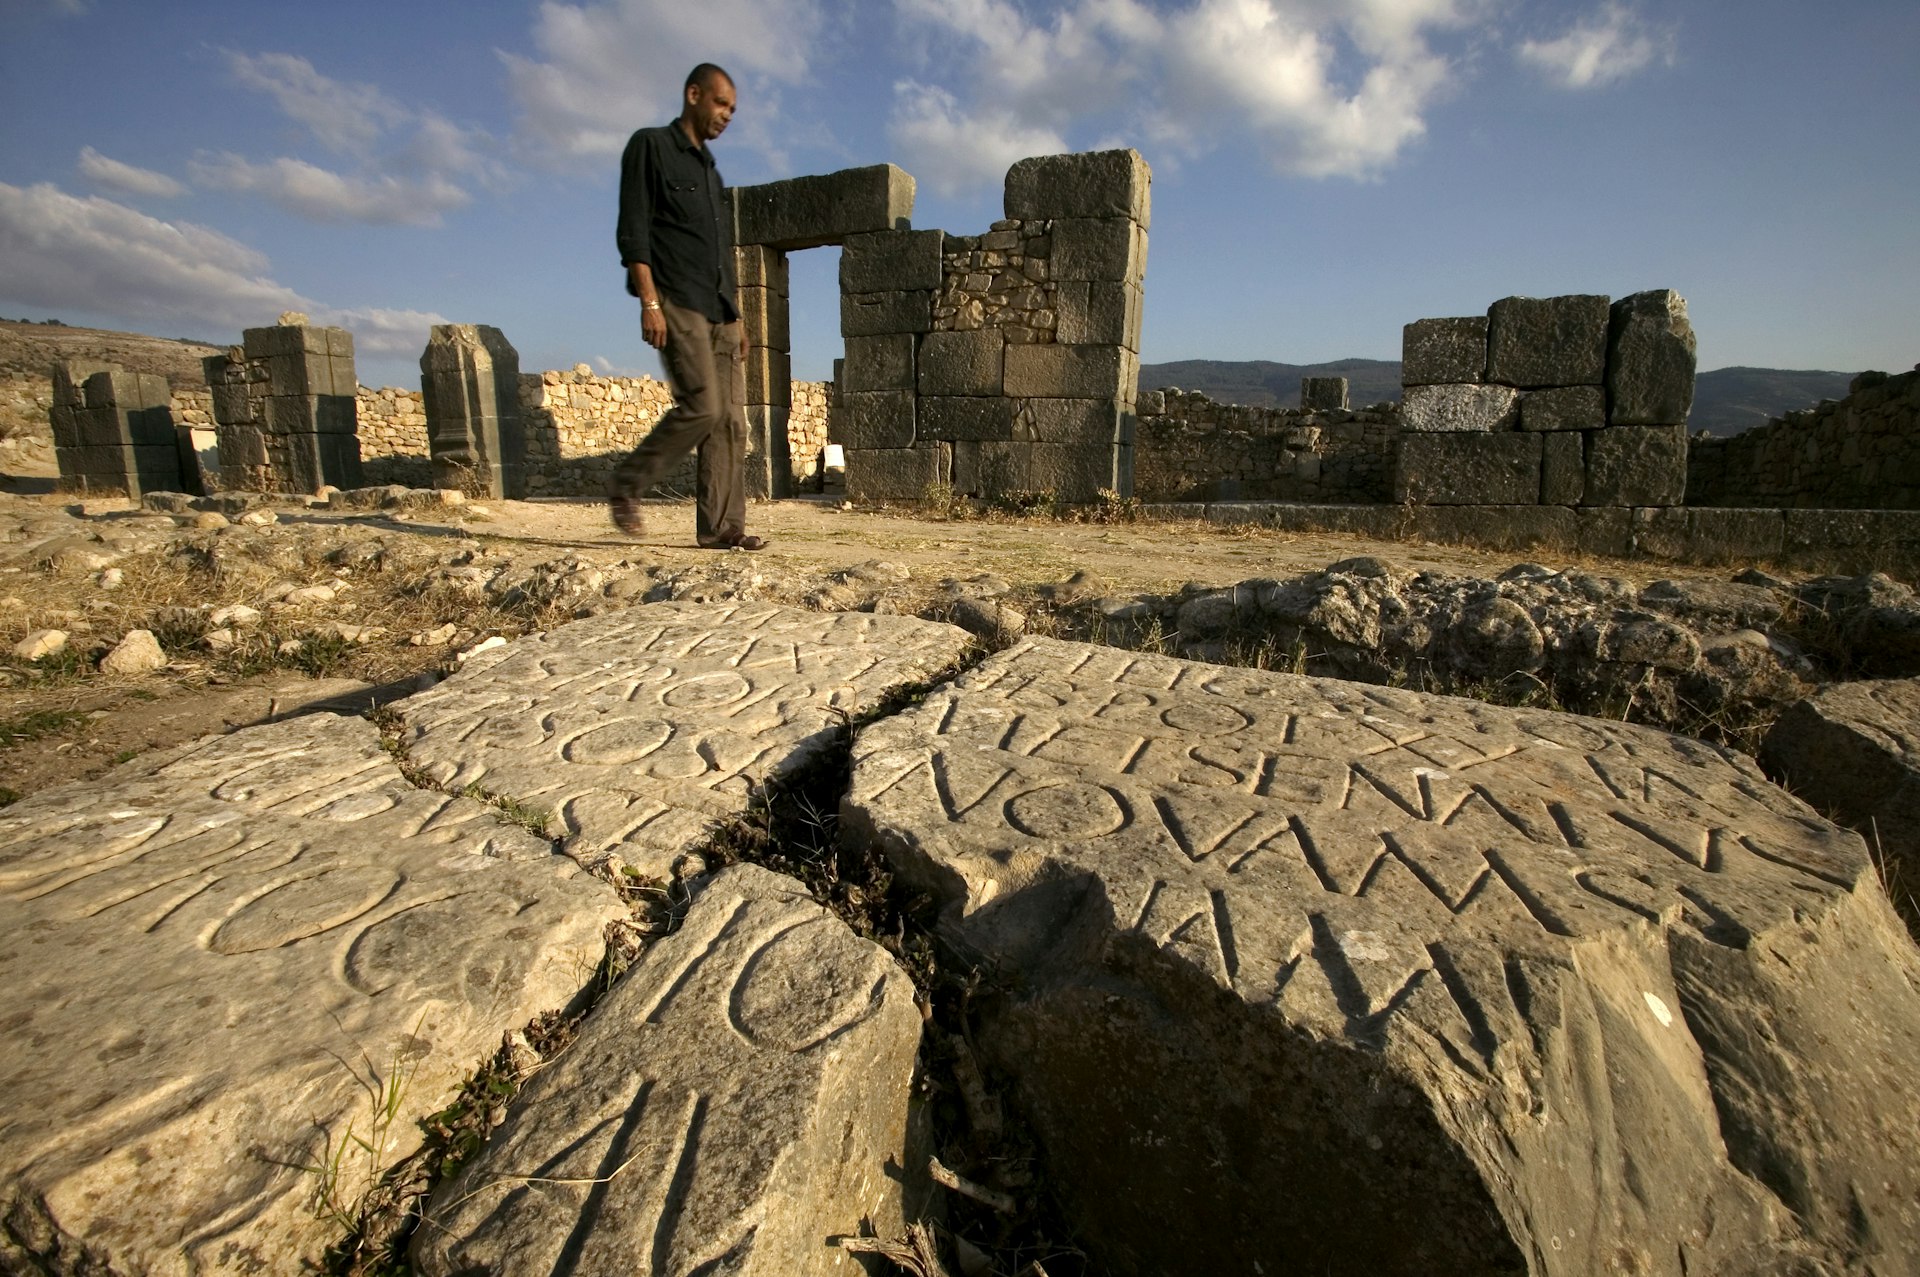 Man walks through the remains of the Roman city of Volubilis